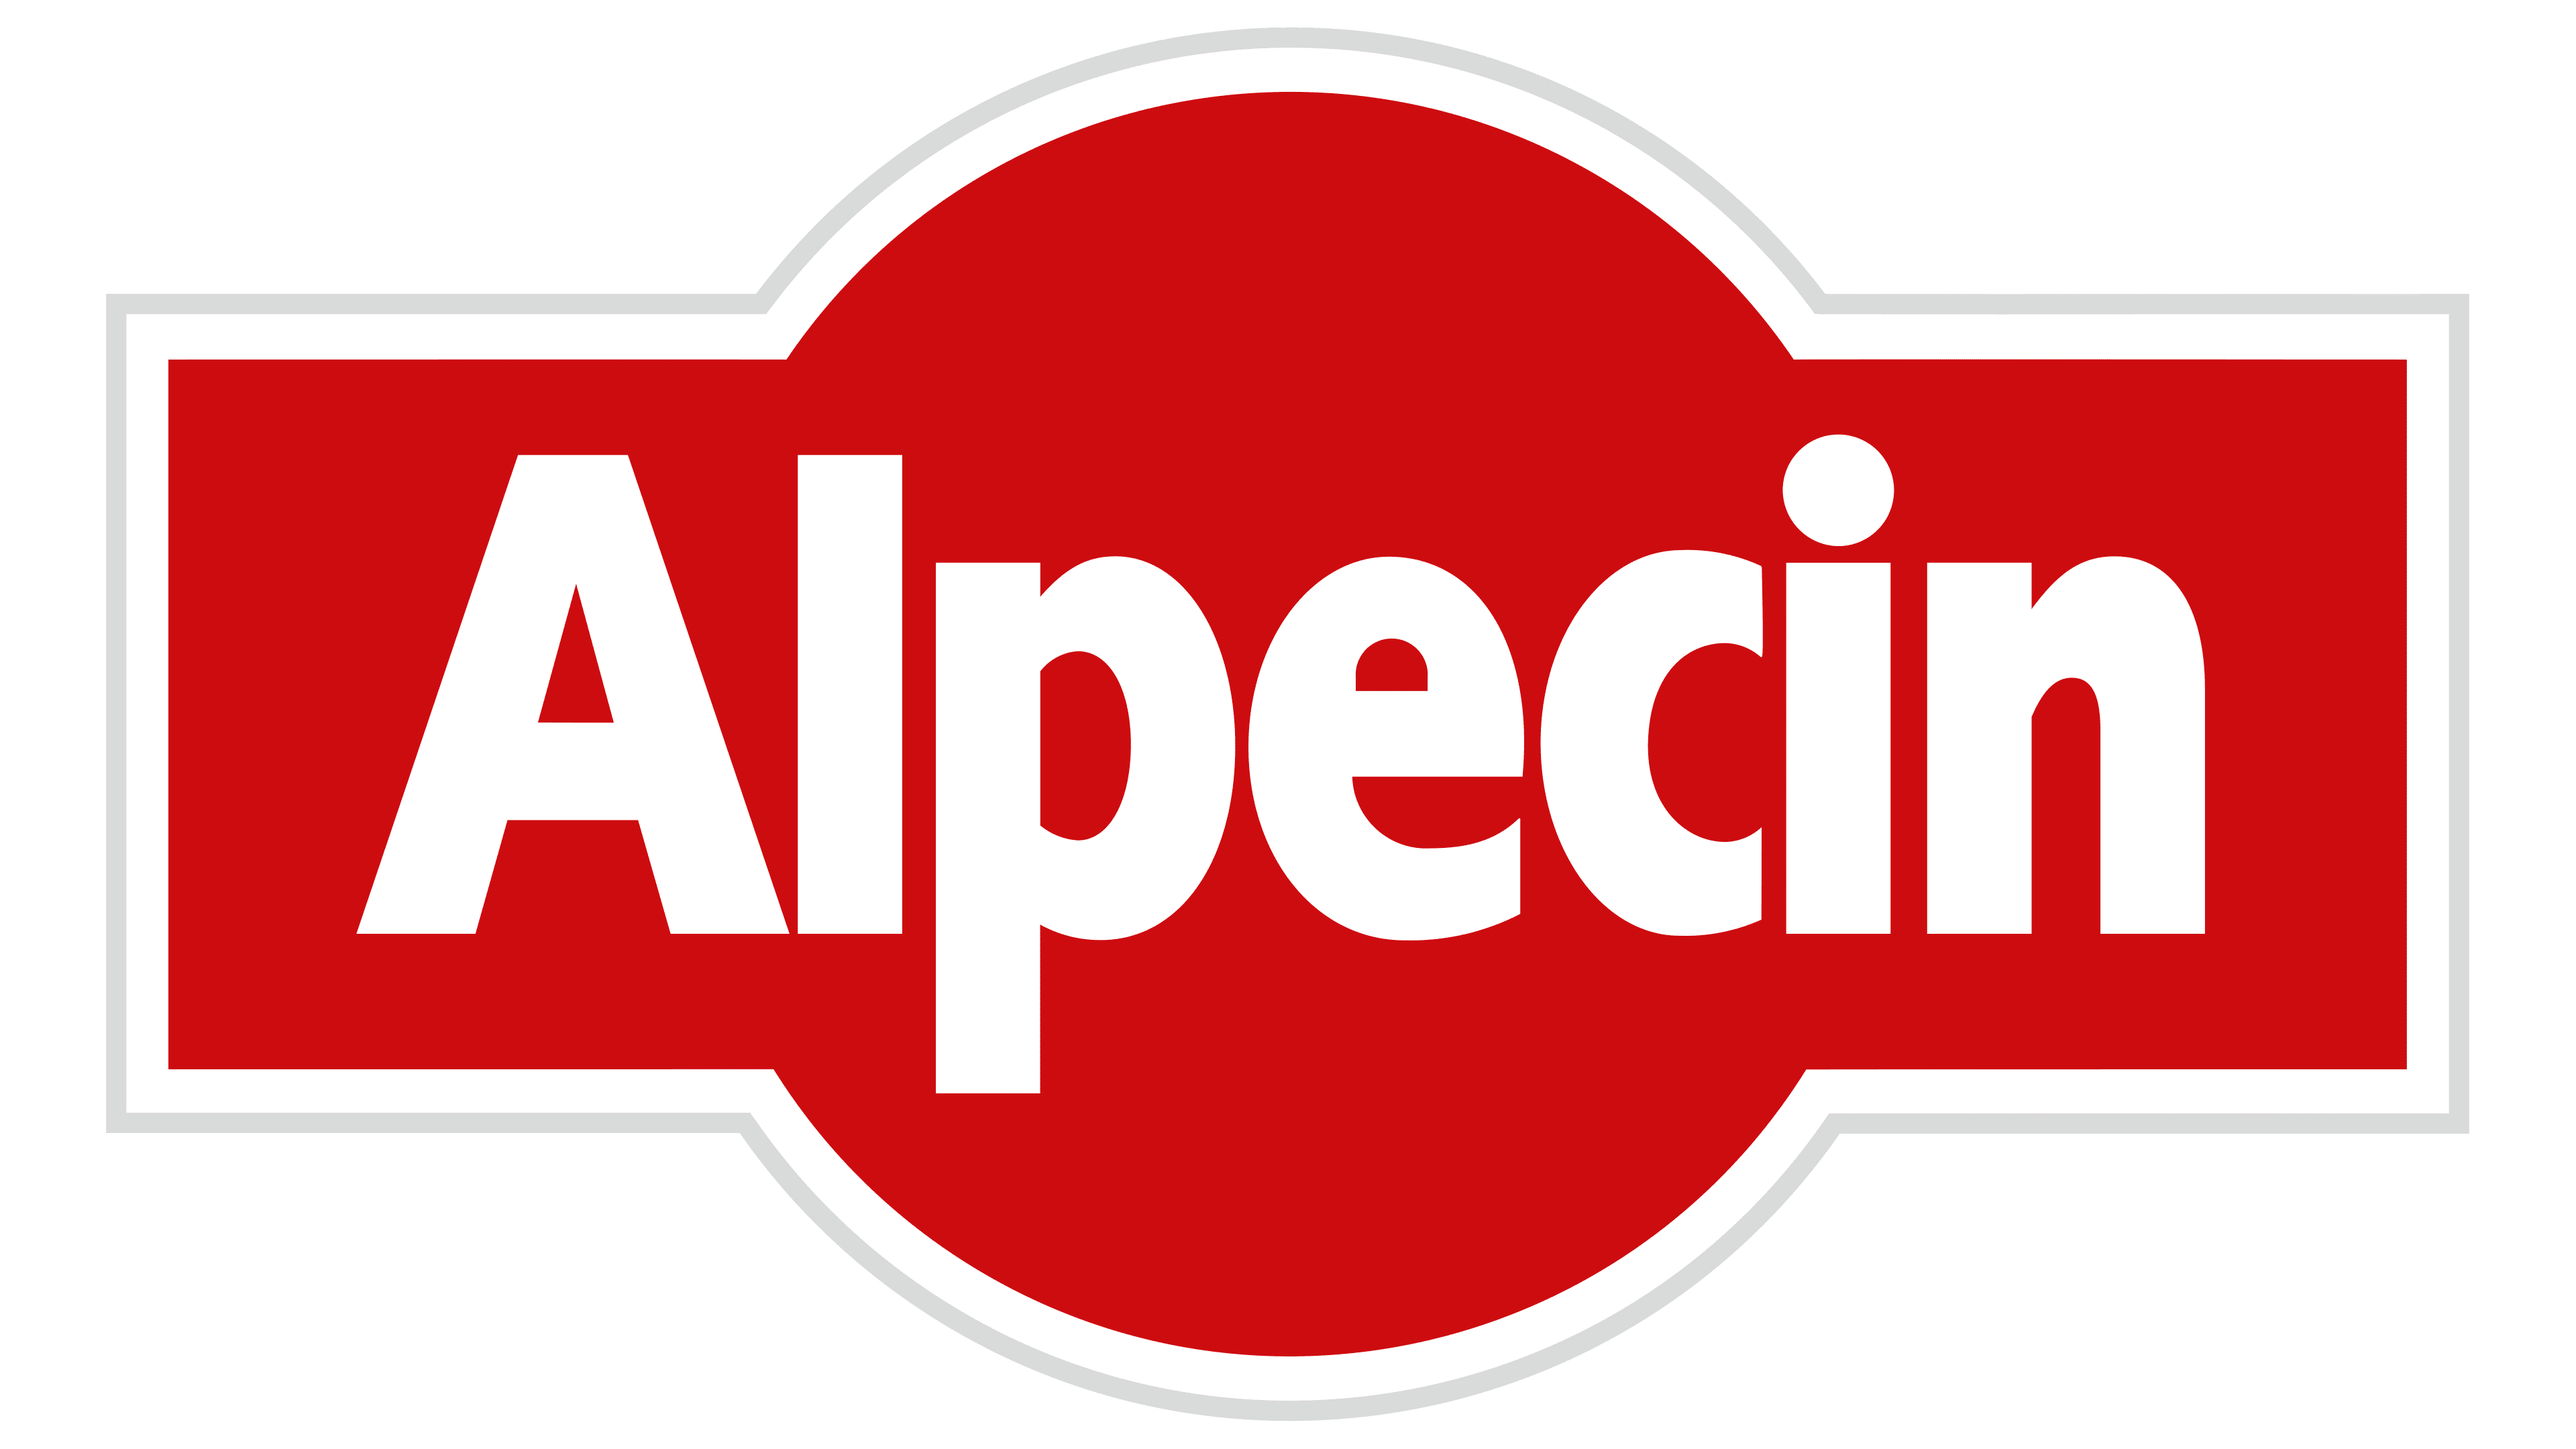 Alpecin Logo